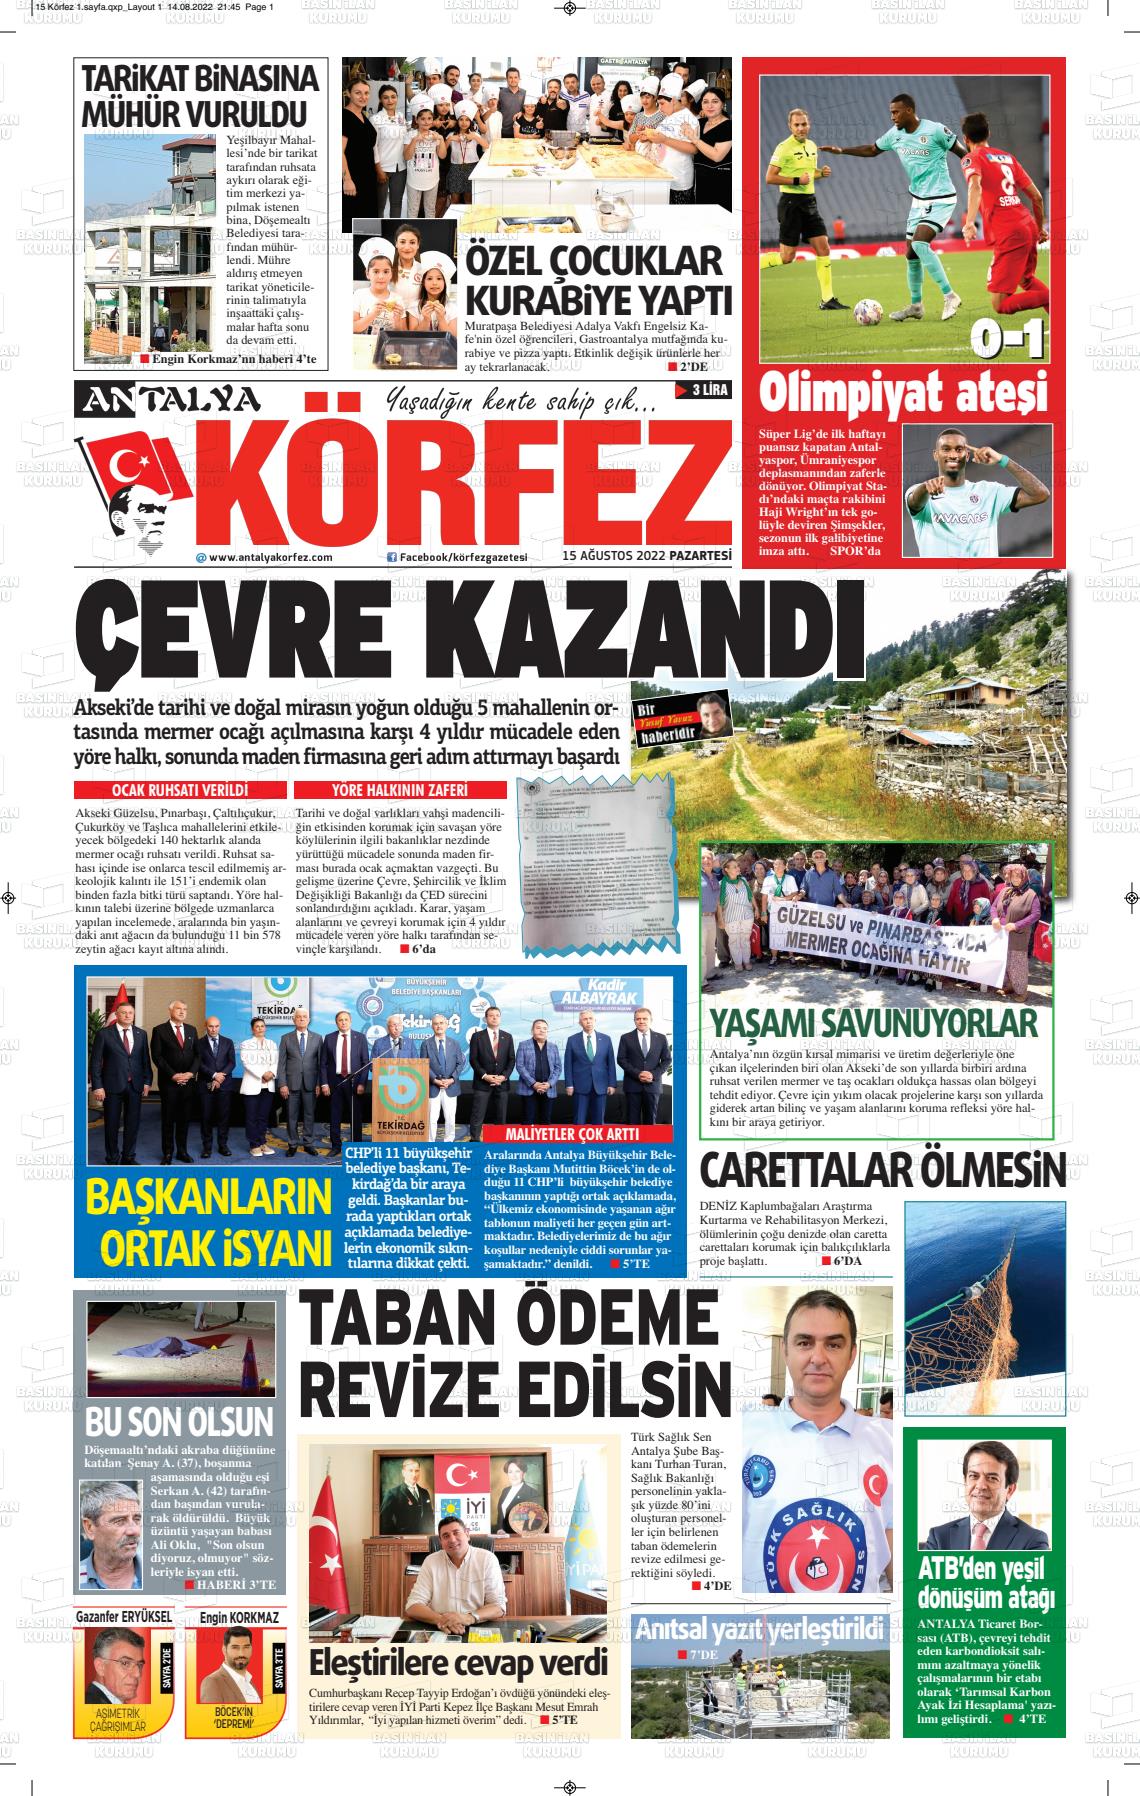 15 Ağustos 2022 Antalya Körfez Gazete Manşeti